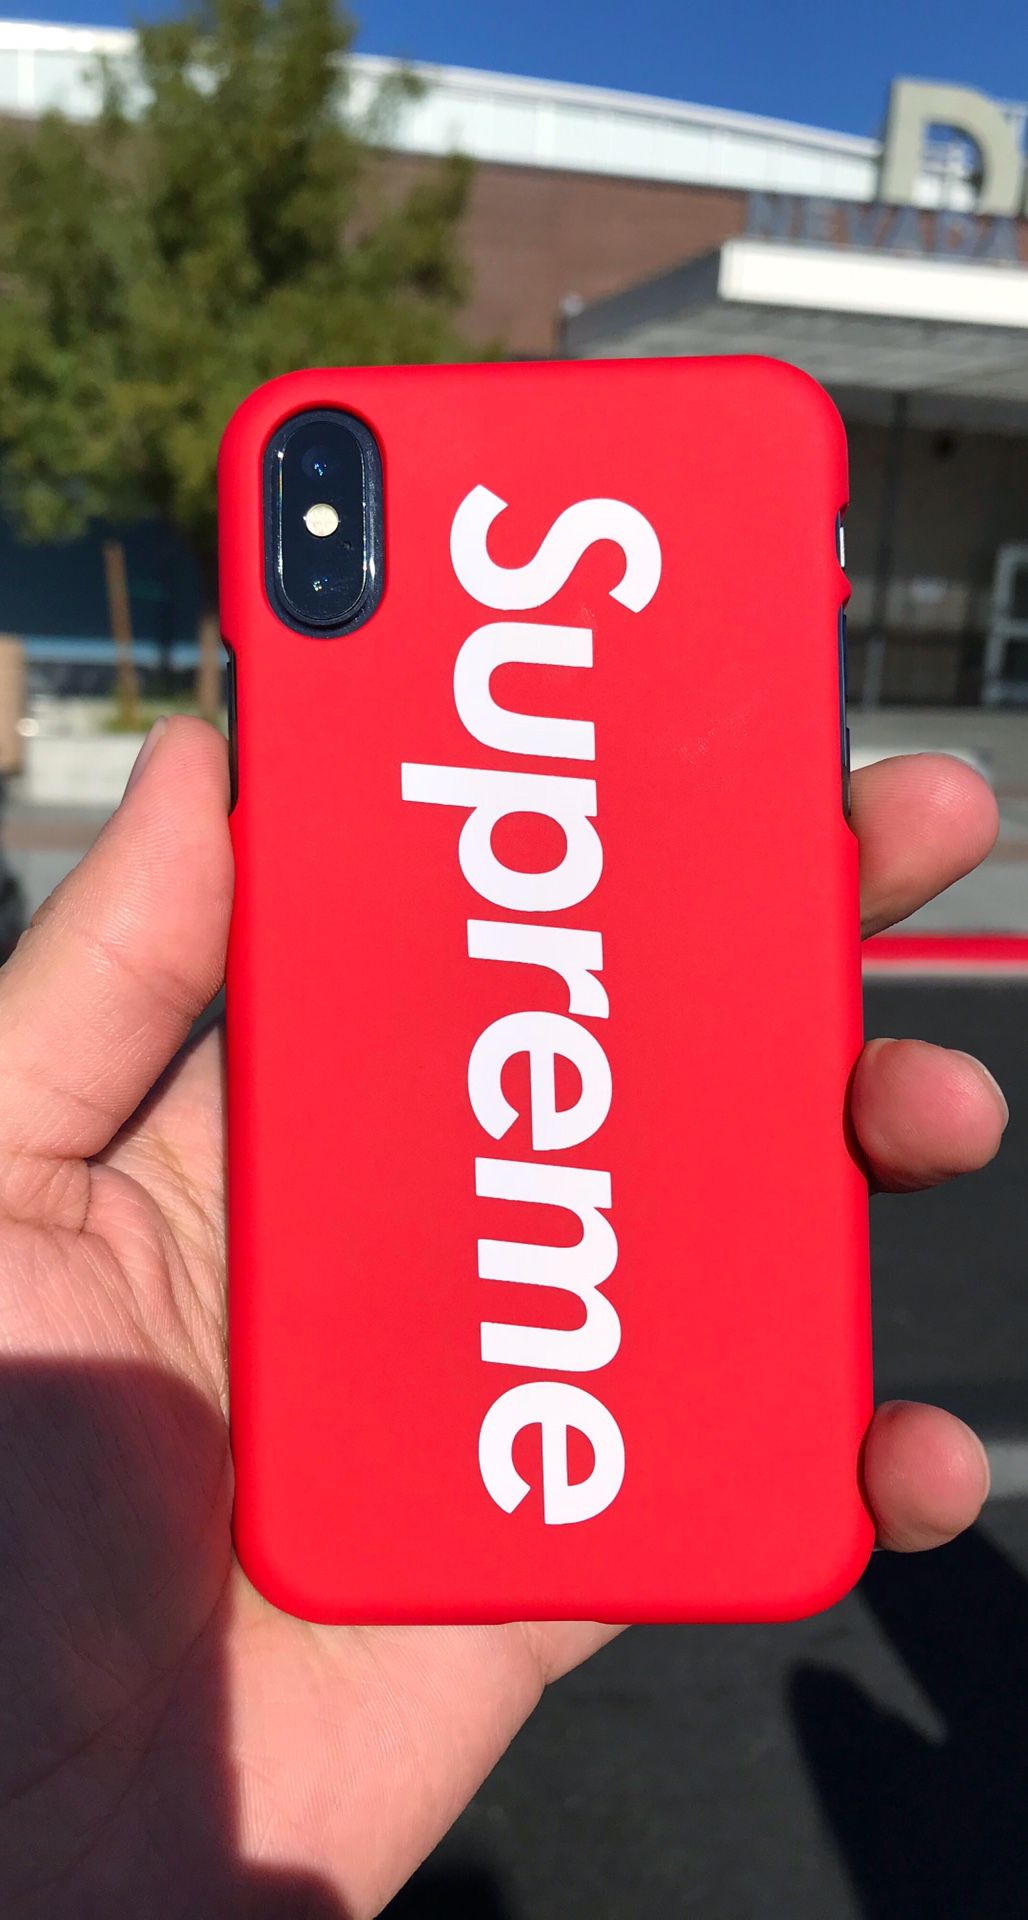 NewSup iPhone Cases